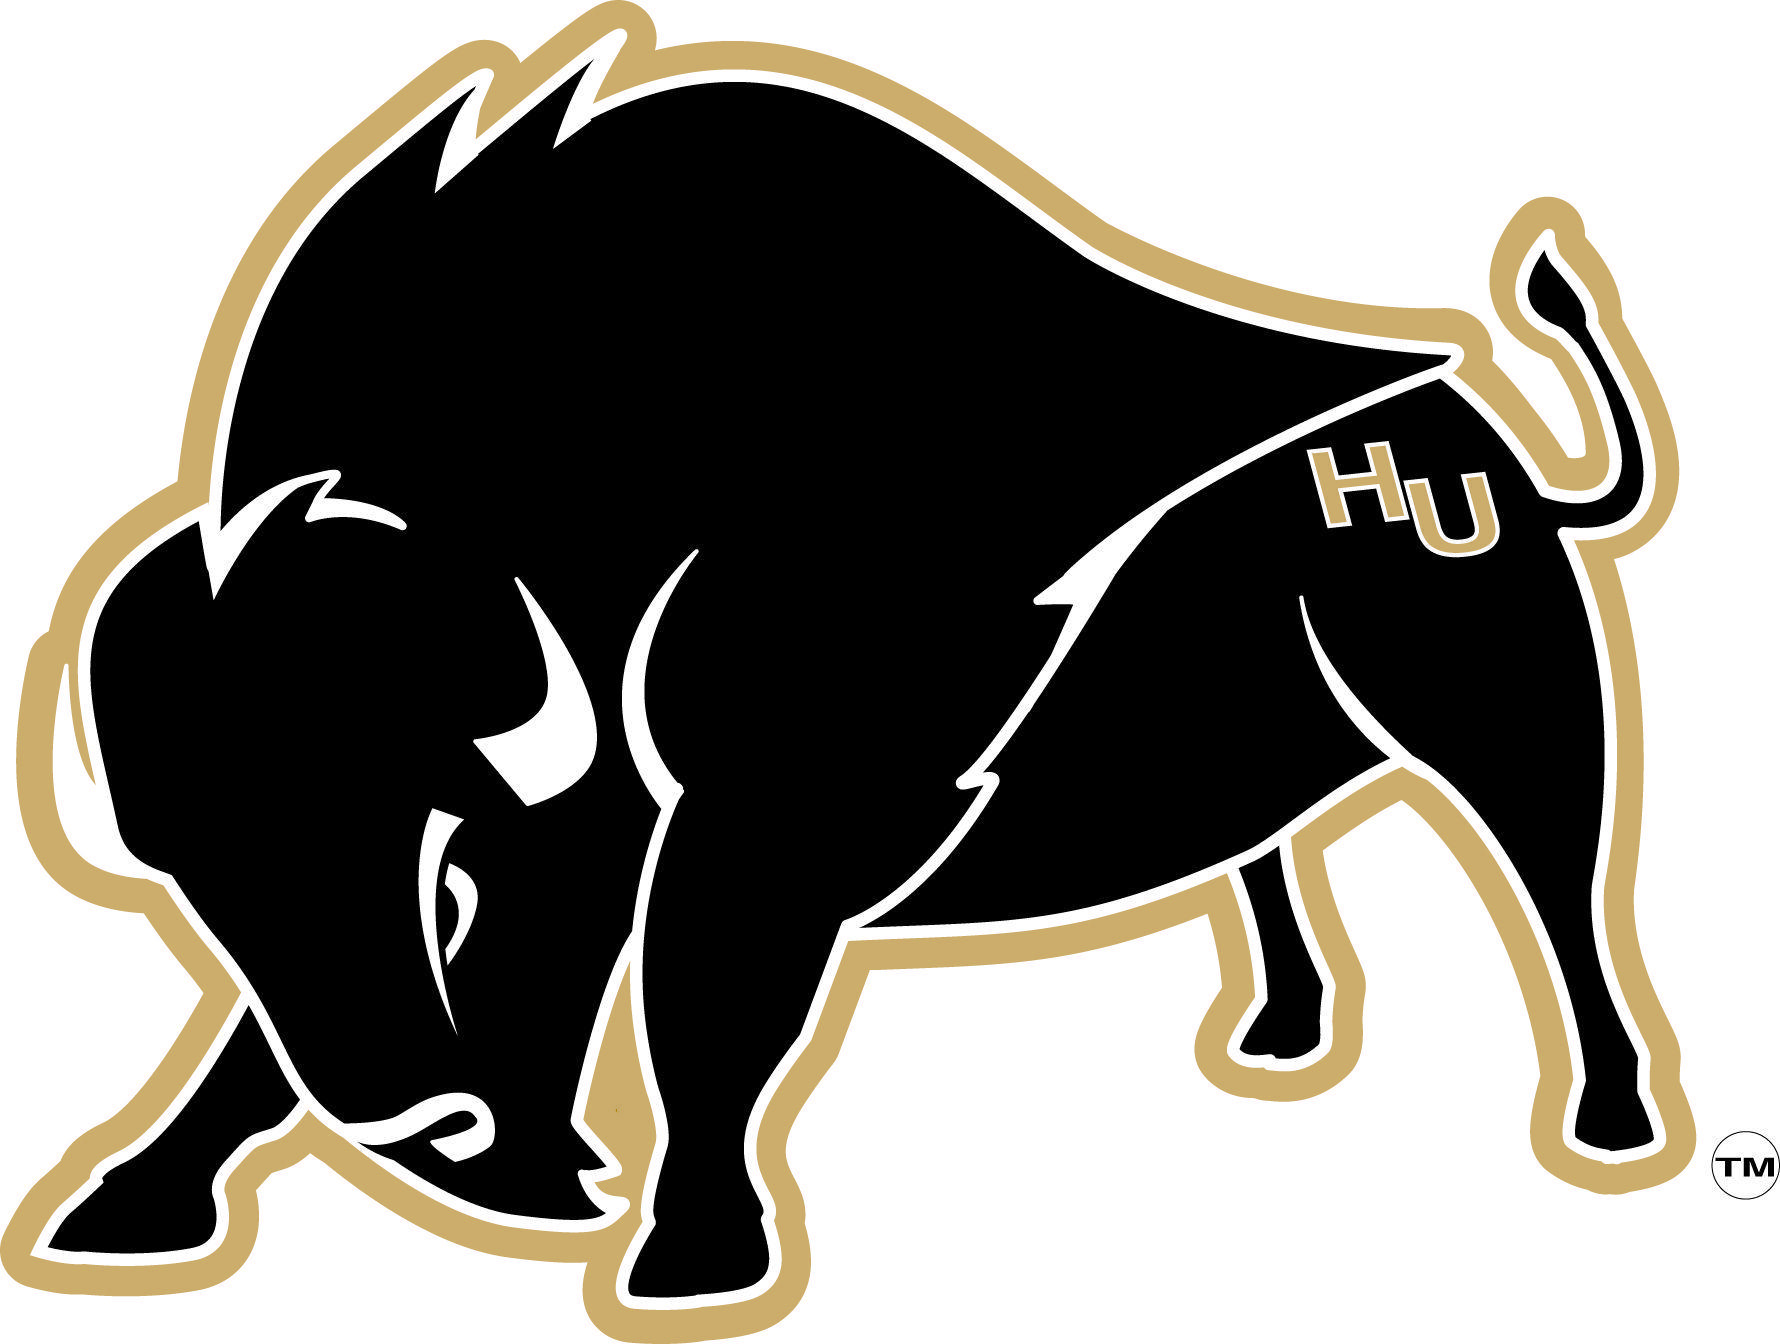 Harding Bison Logo - Harding University- Bison | College mascots and logos | Pinterest ...